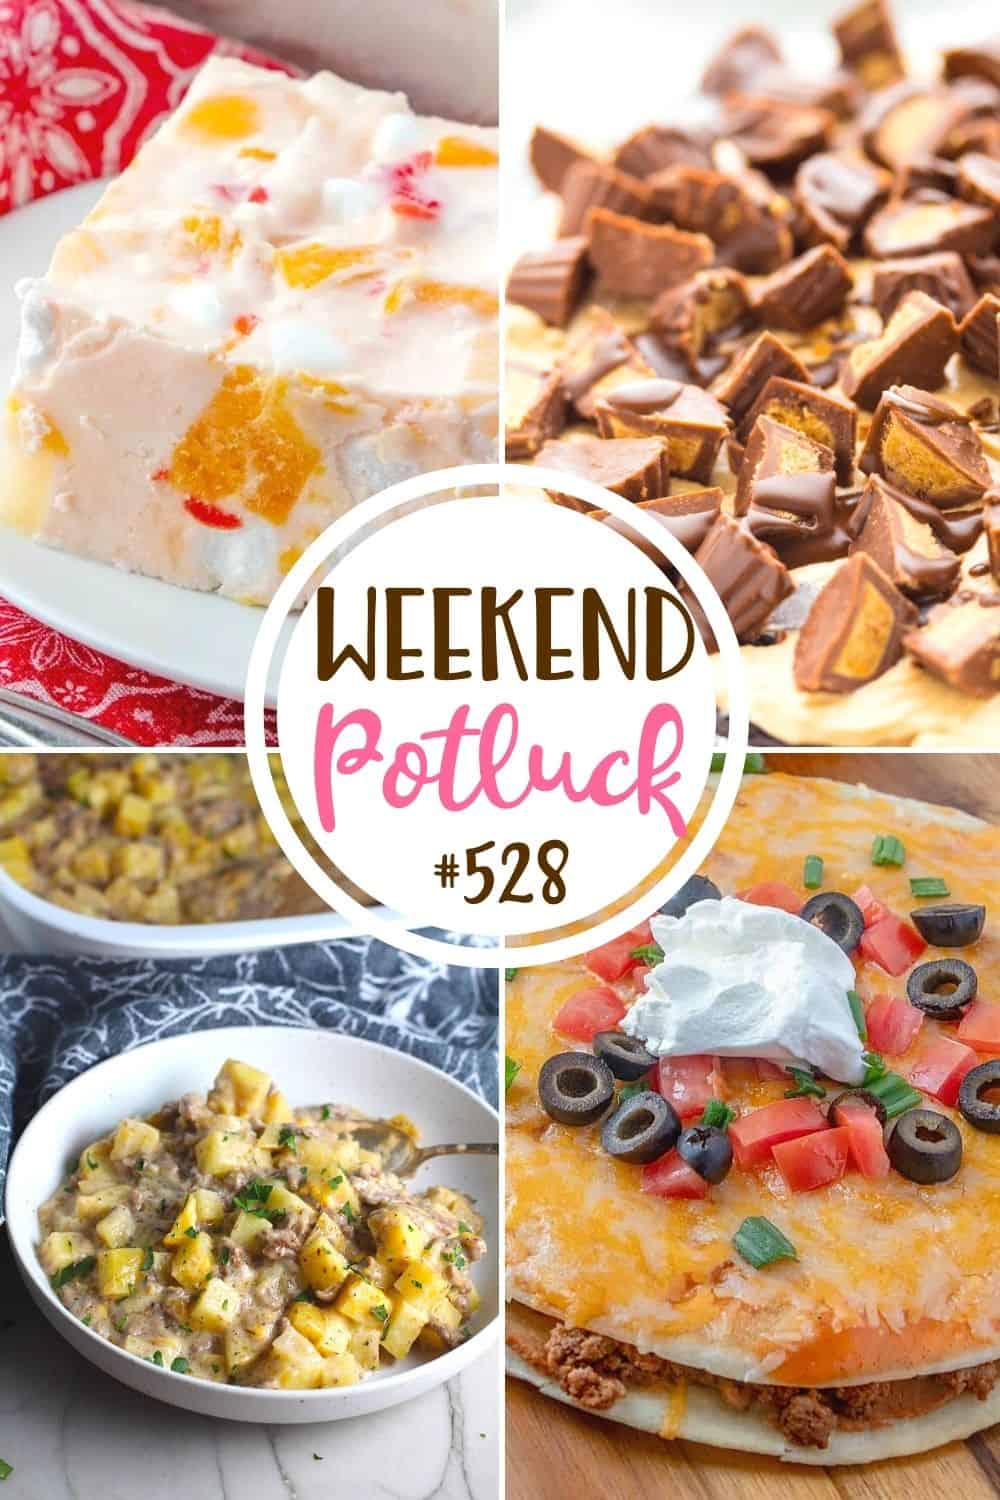 Weekend Potluck recipes: Grandma's Frozen Fruit Salad, Hamburger Potato Casserole, No-Bake Peanut Butter Cup Pie and Taco Bell Mexican Pizza.